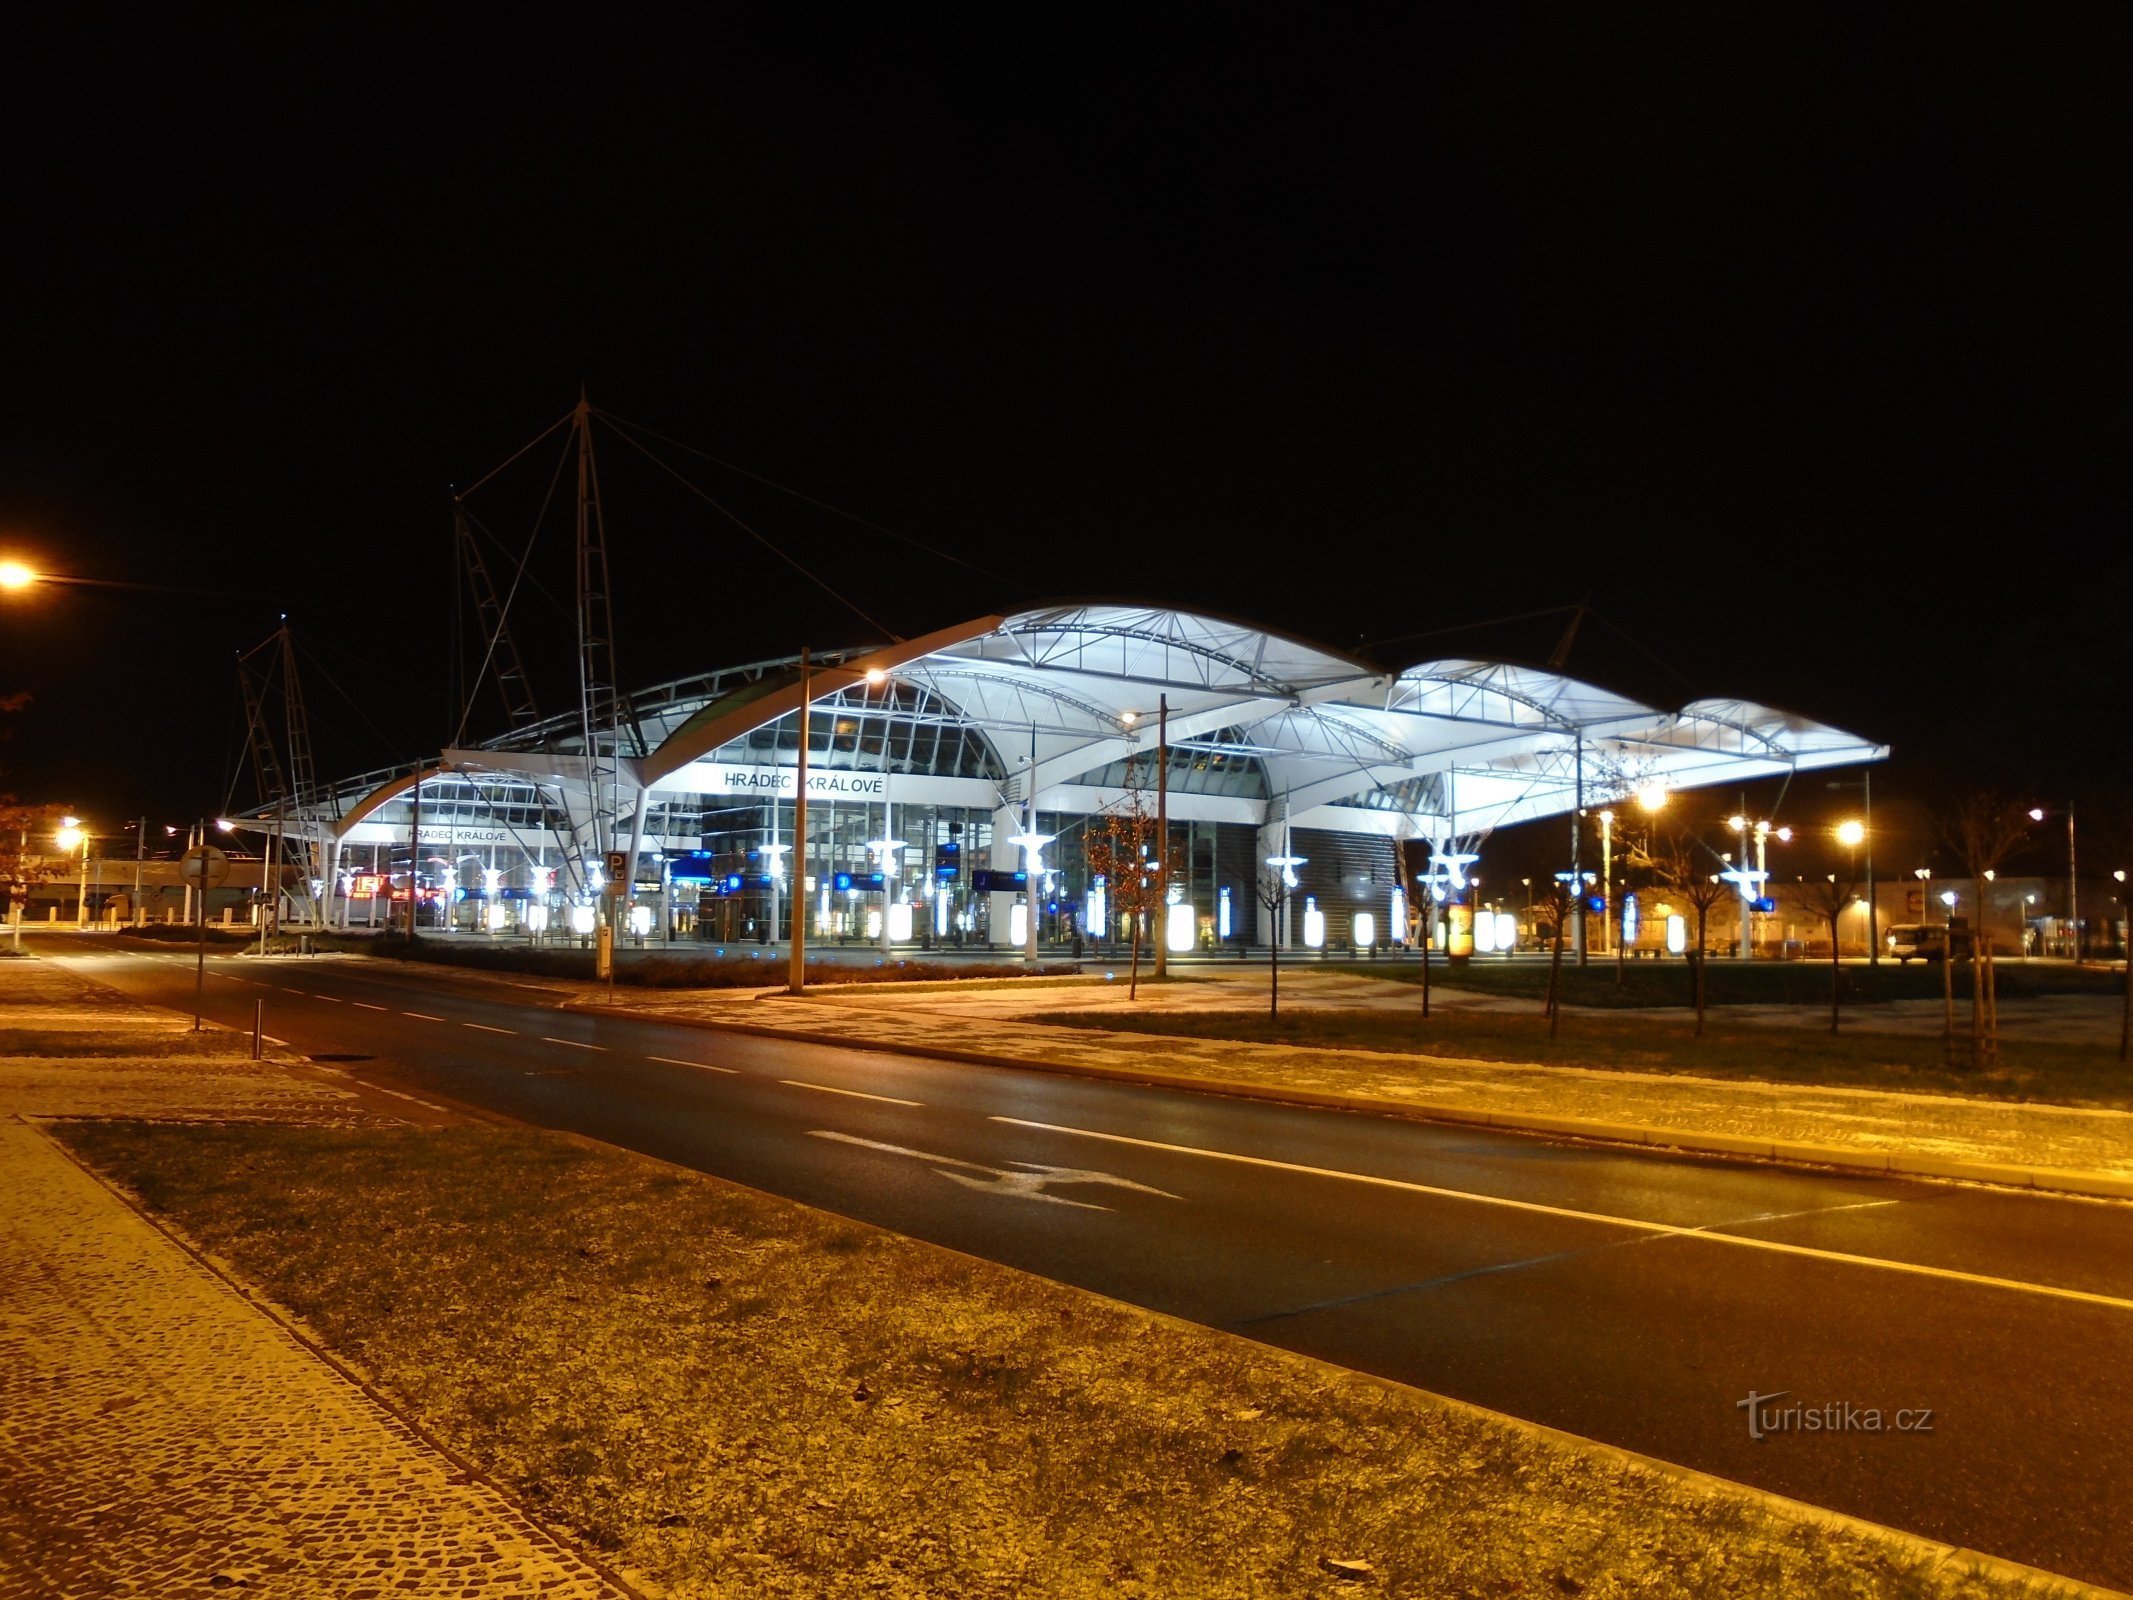 Terminal dei trasporti di massa (Hradec Králové)